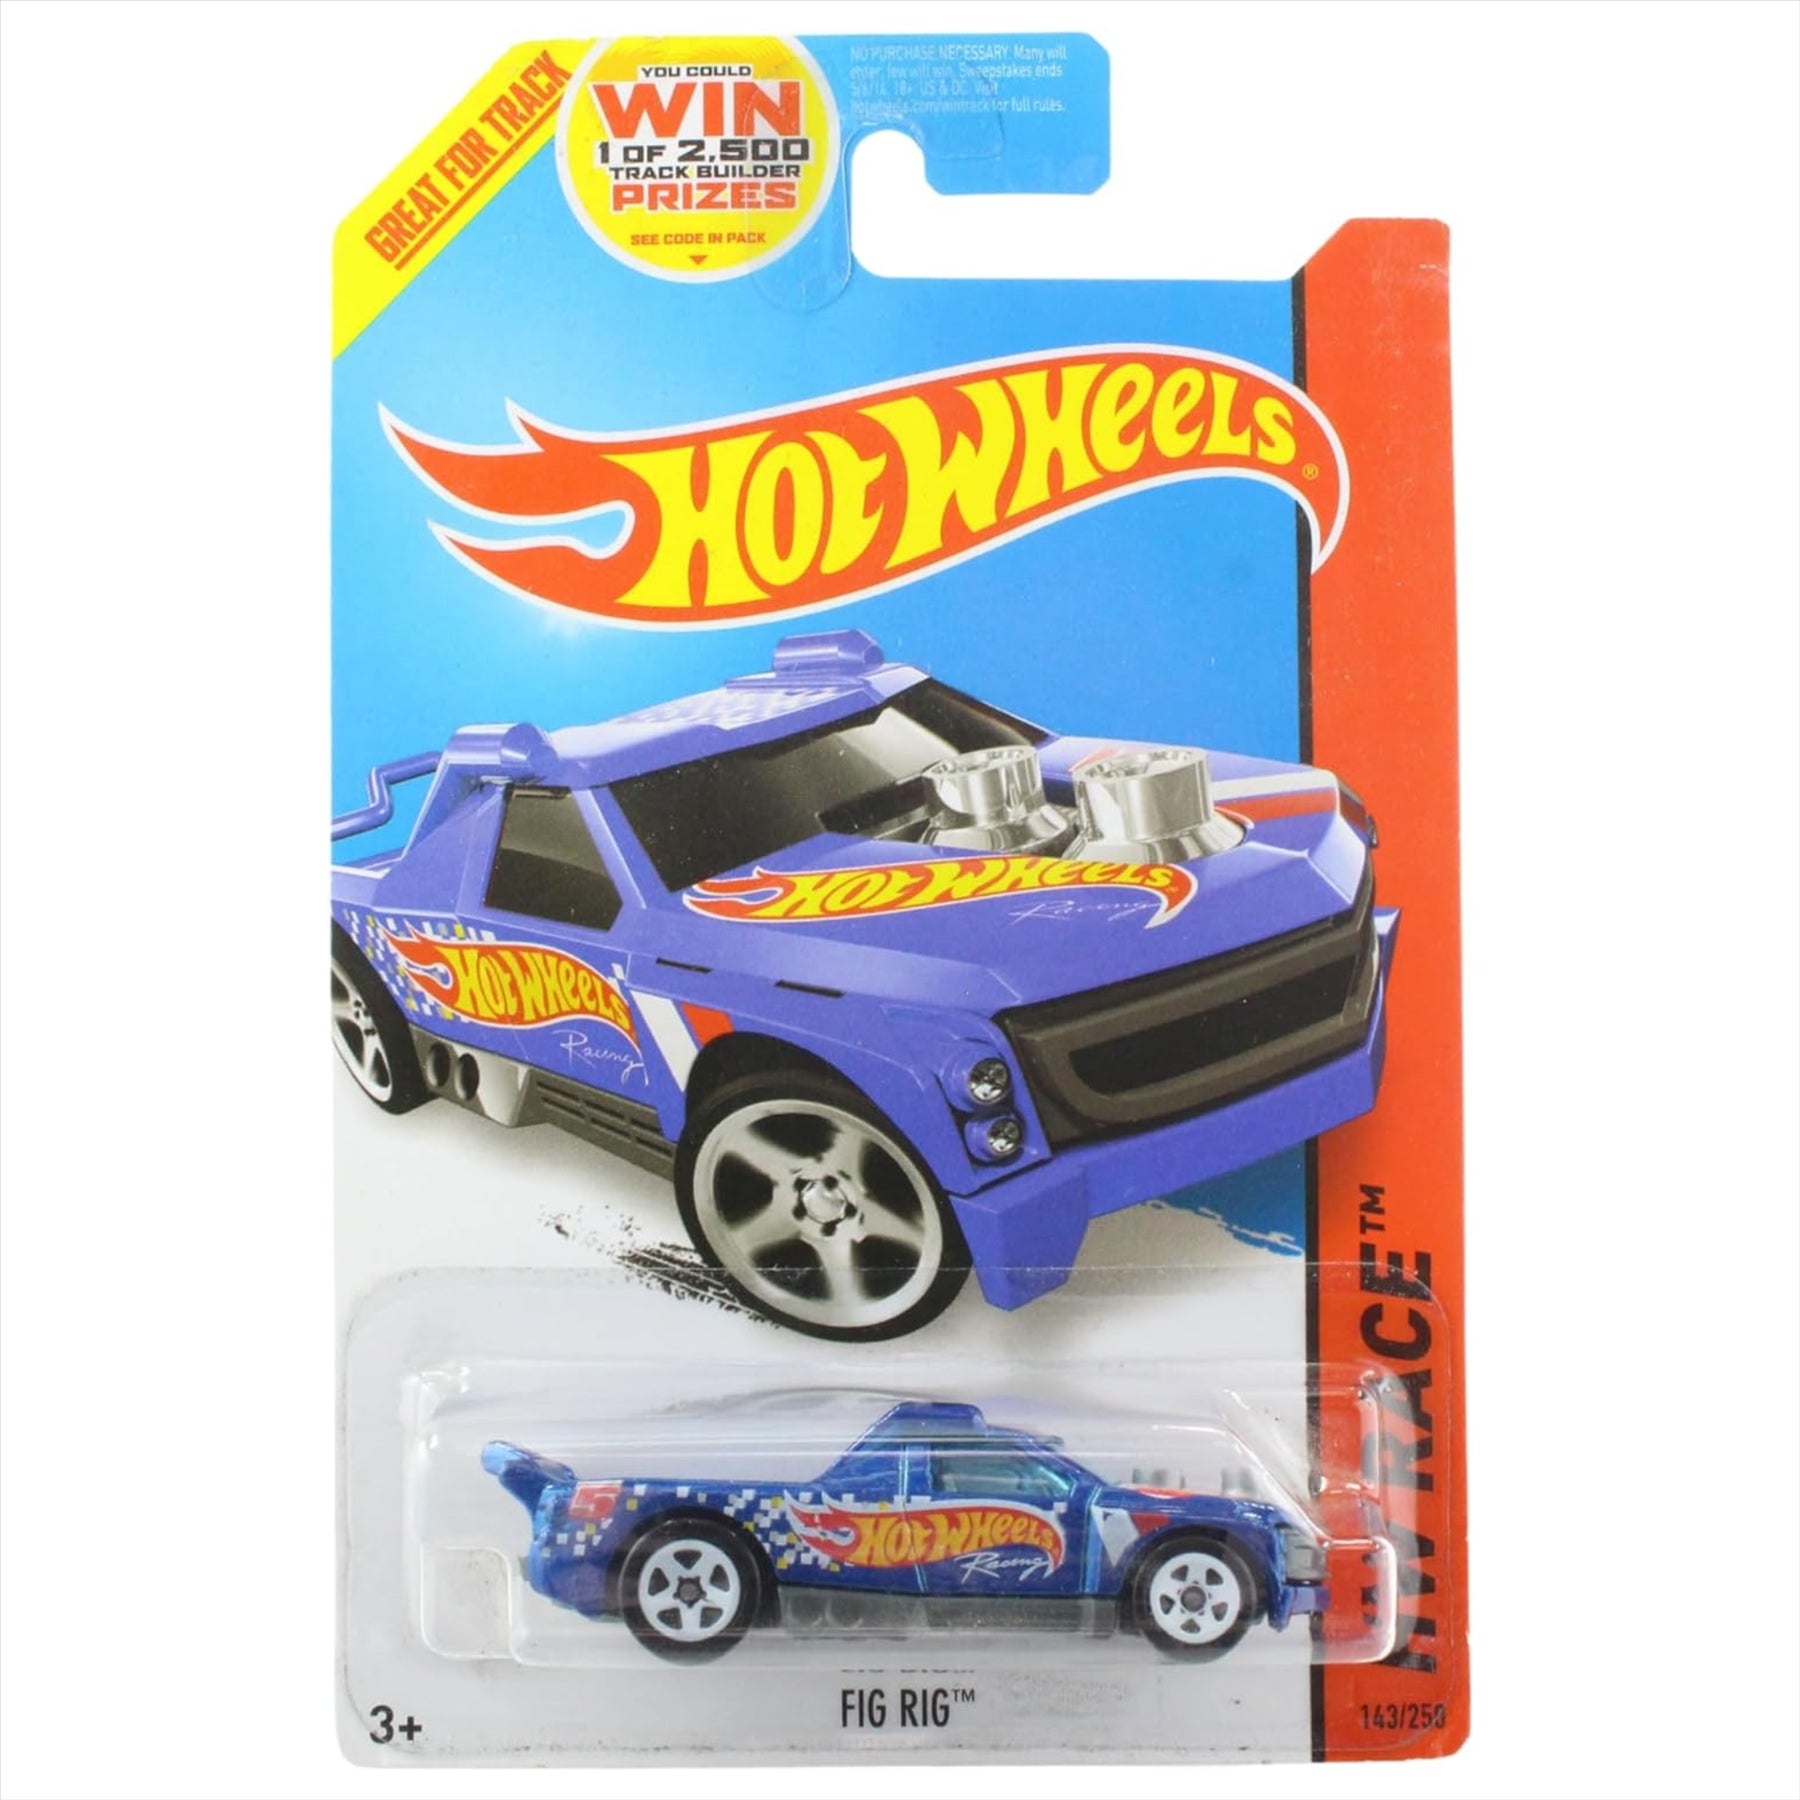 Hot Wheels Race Series - Fig Rig 1:64 Scale Diecast Model Car - Toptoys2u